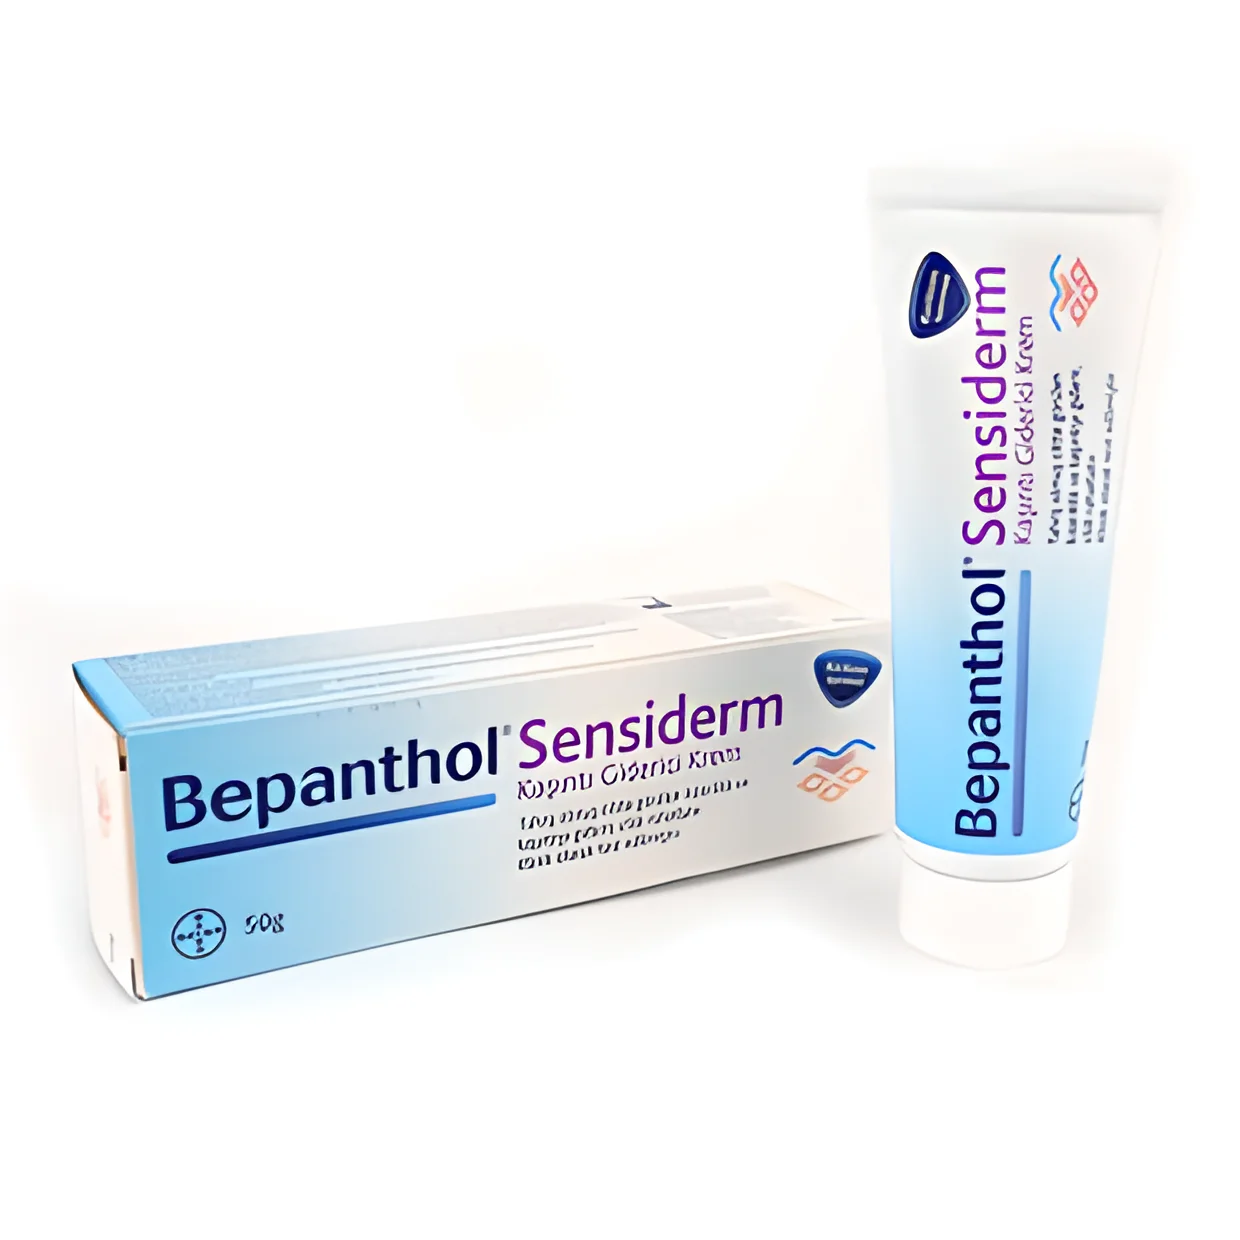 

Bepanthol Sensiderm anti-Itch Cream 50 G